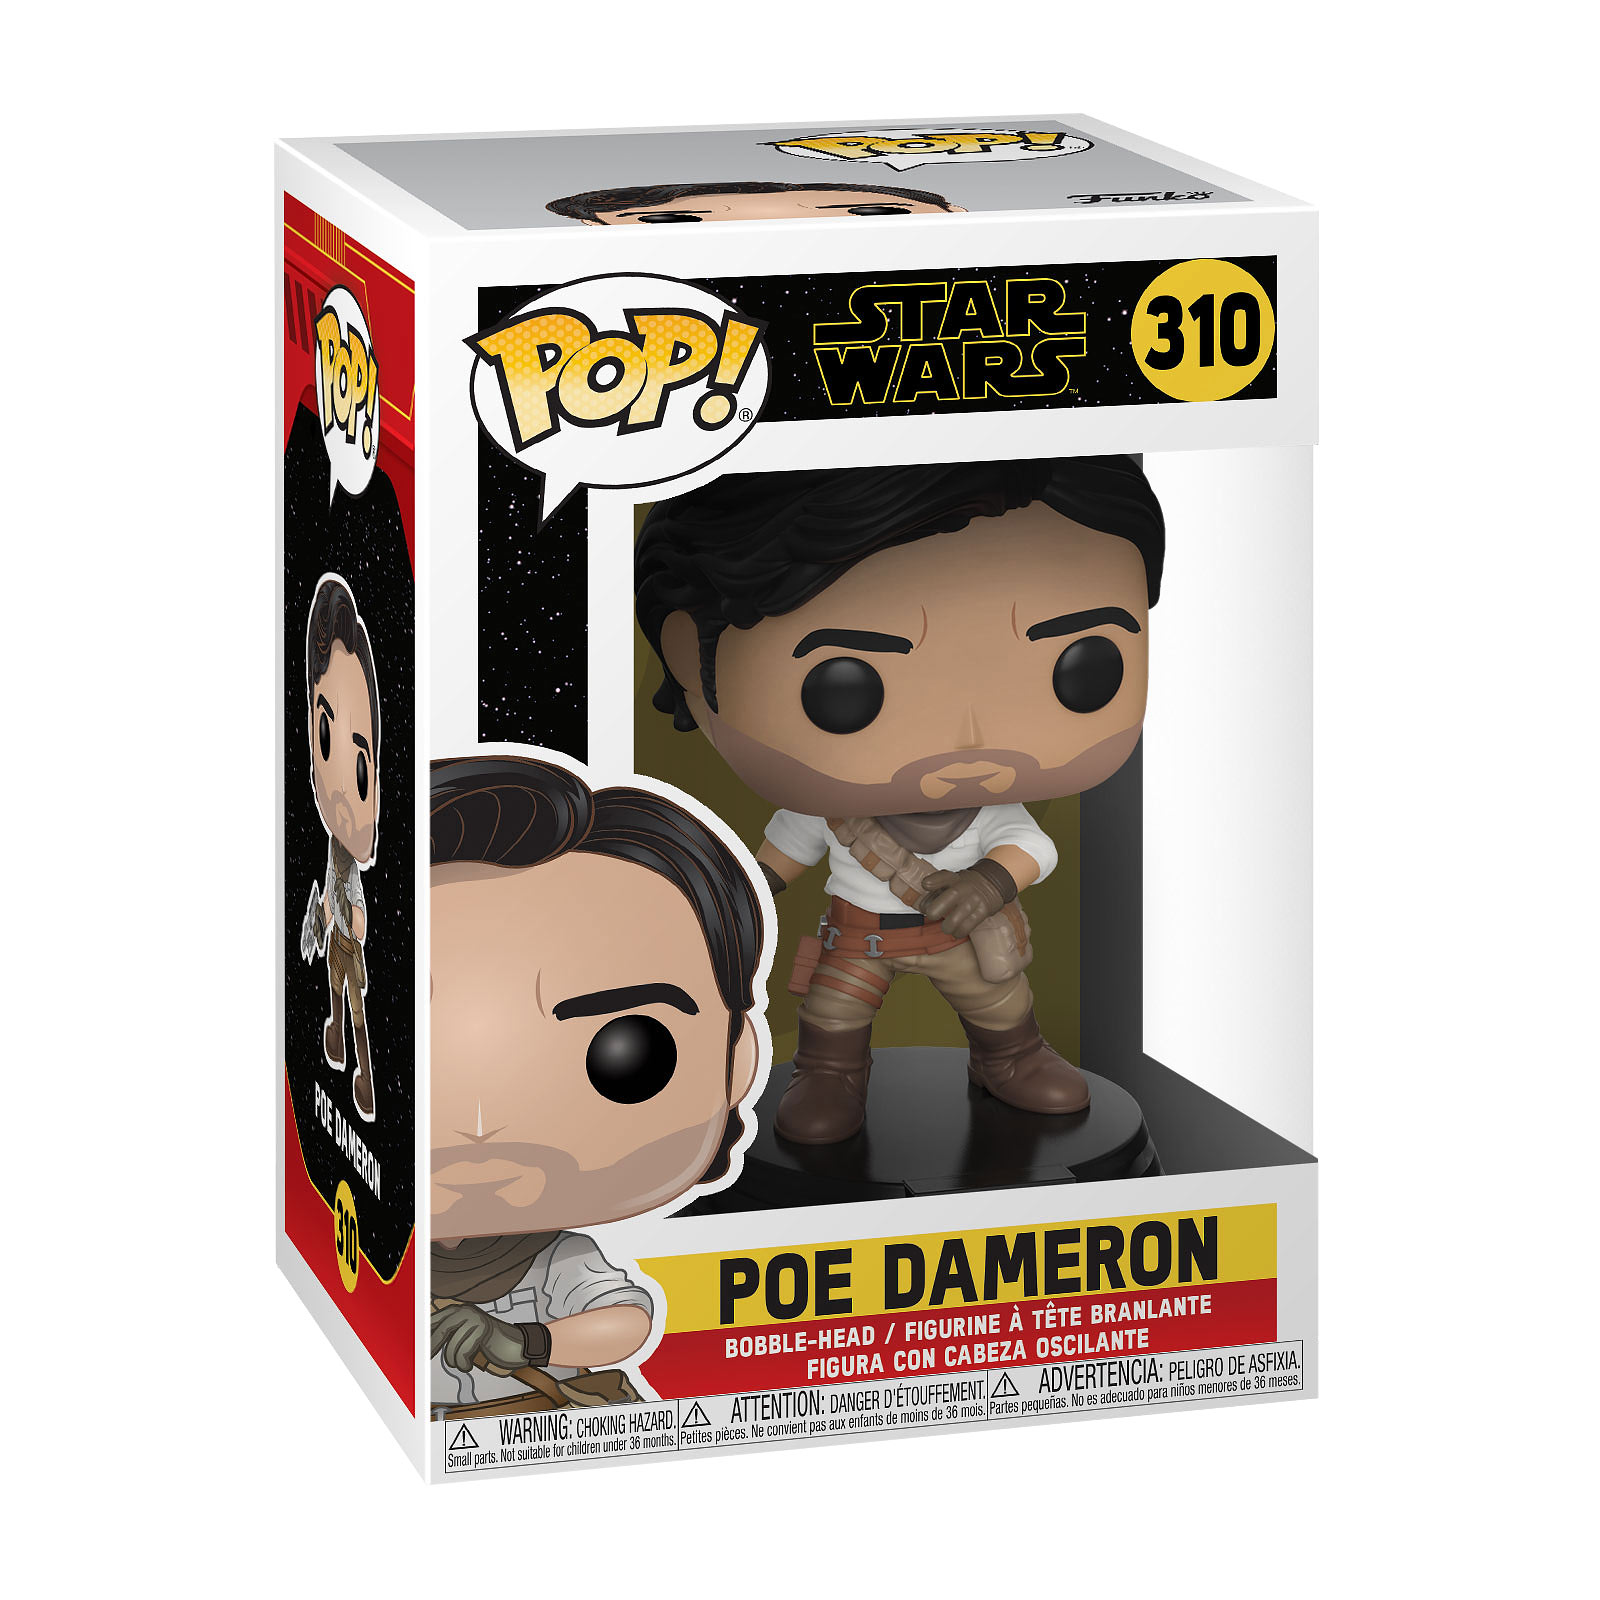 Star Wars - Poe Dameron épisode 9 Figurine Funko Pop à tête branlante